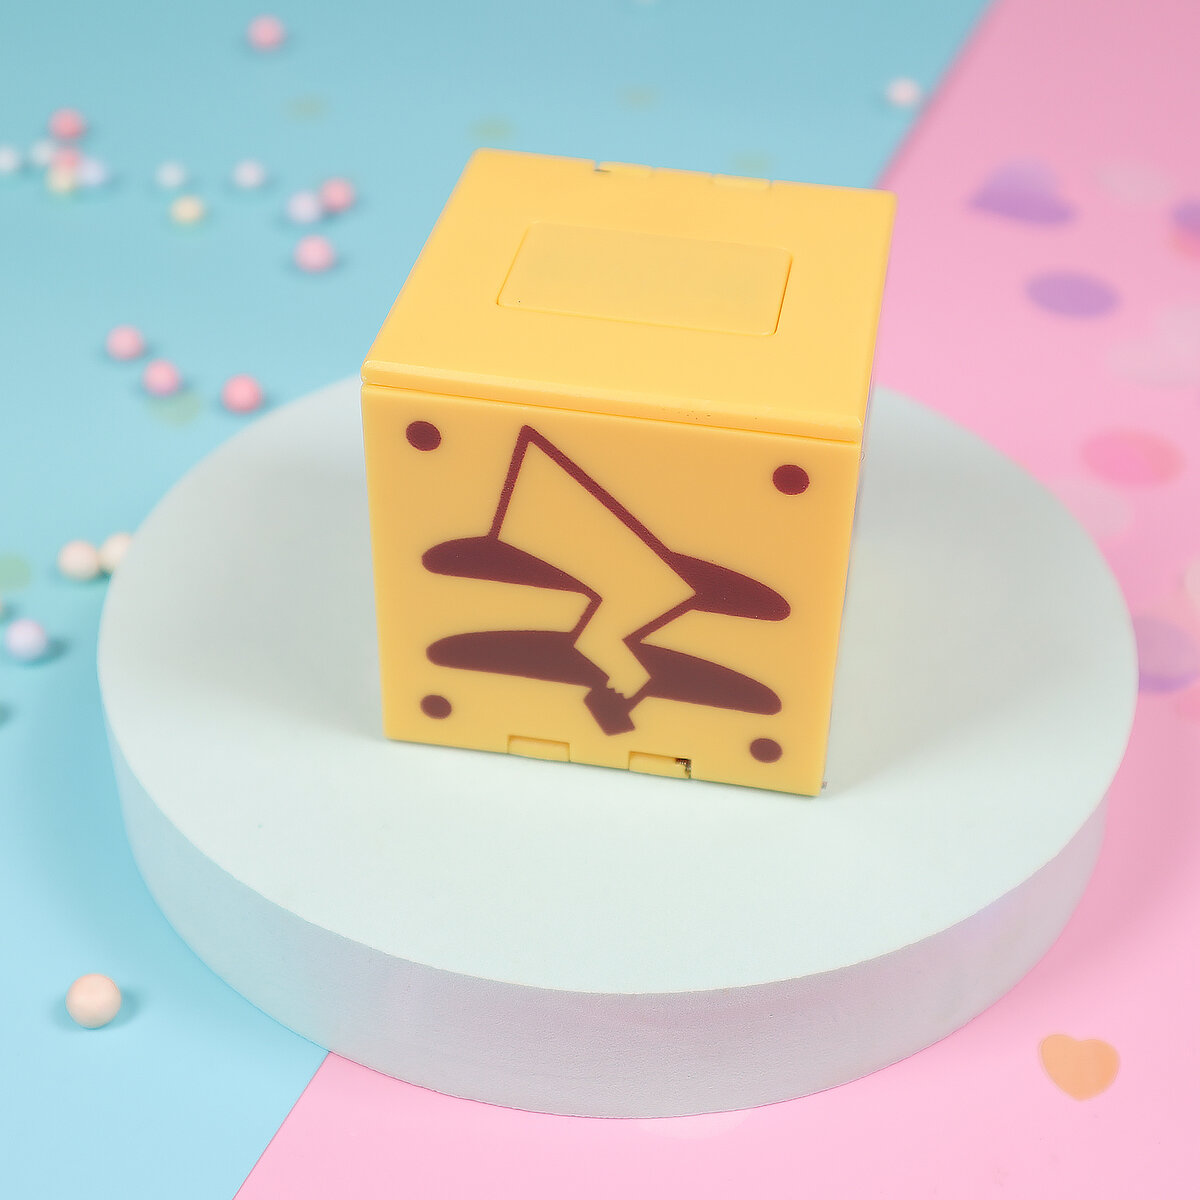 Switch-spelförvaring Pikachu svans kub